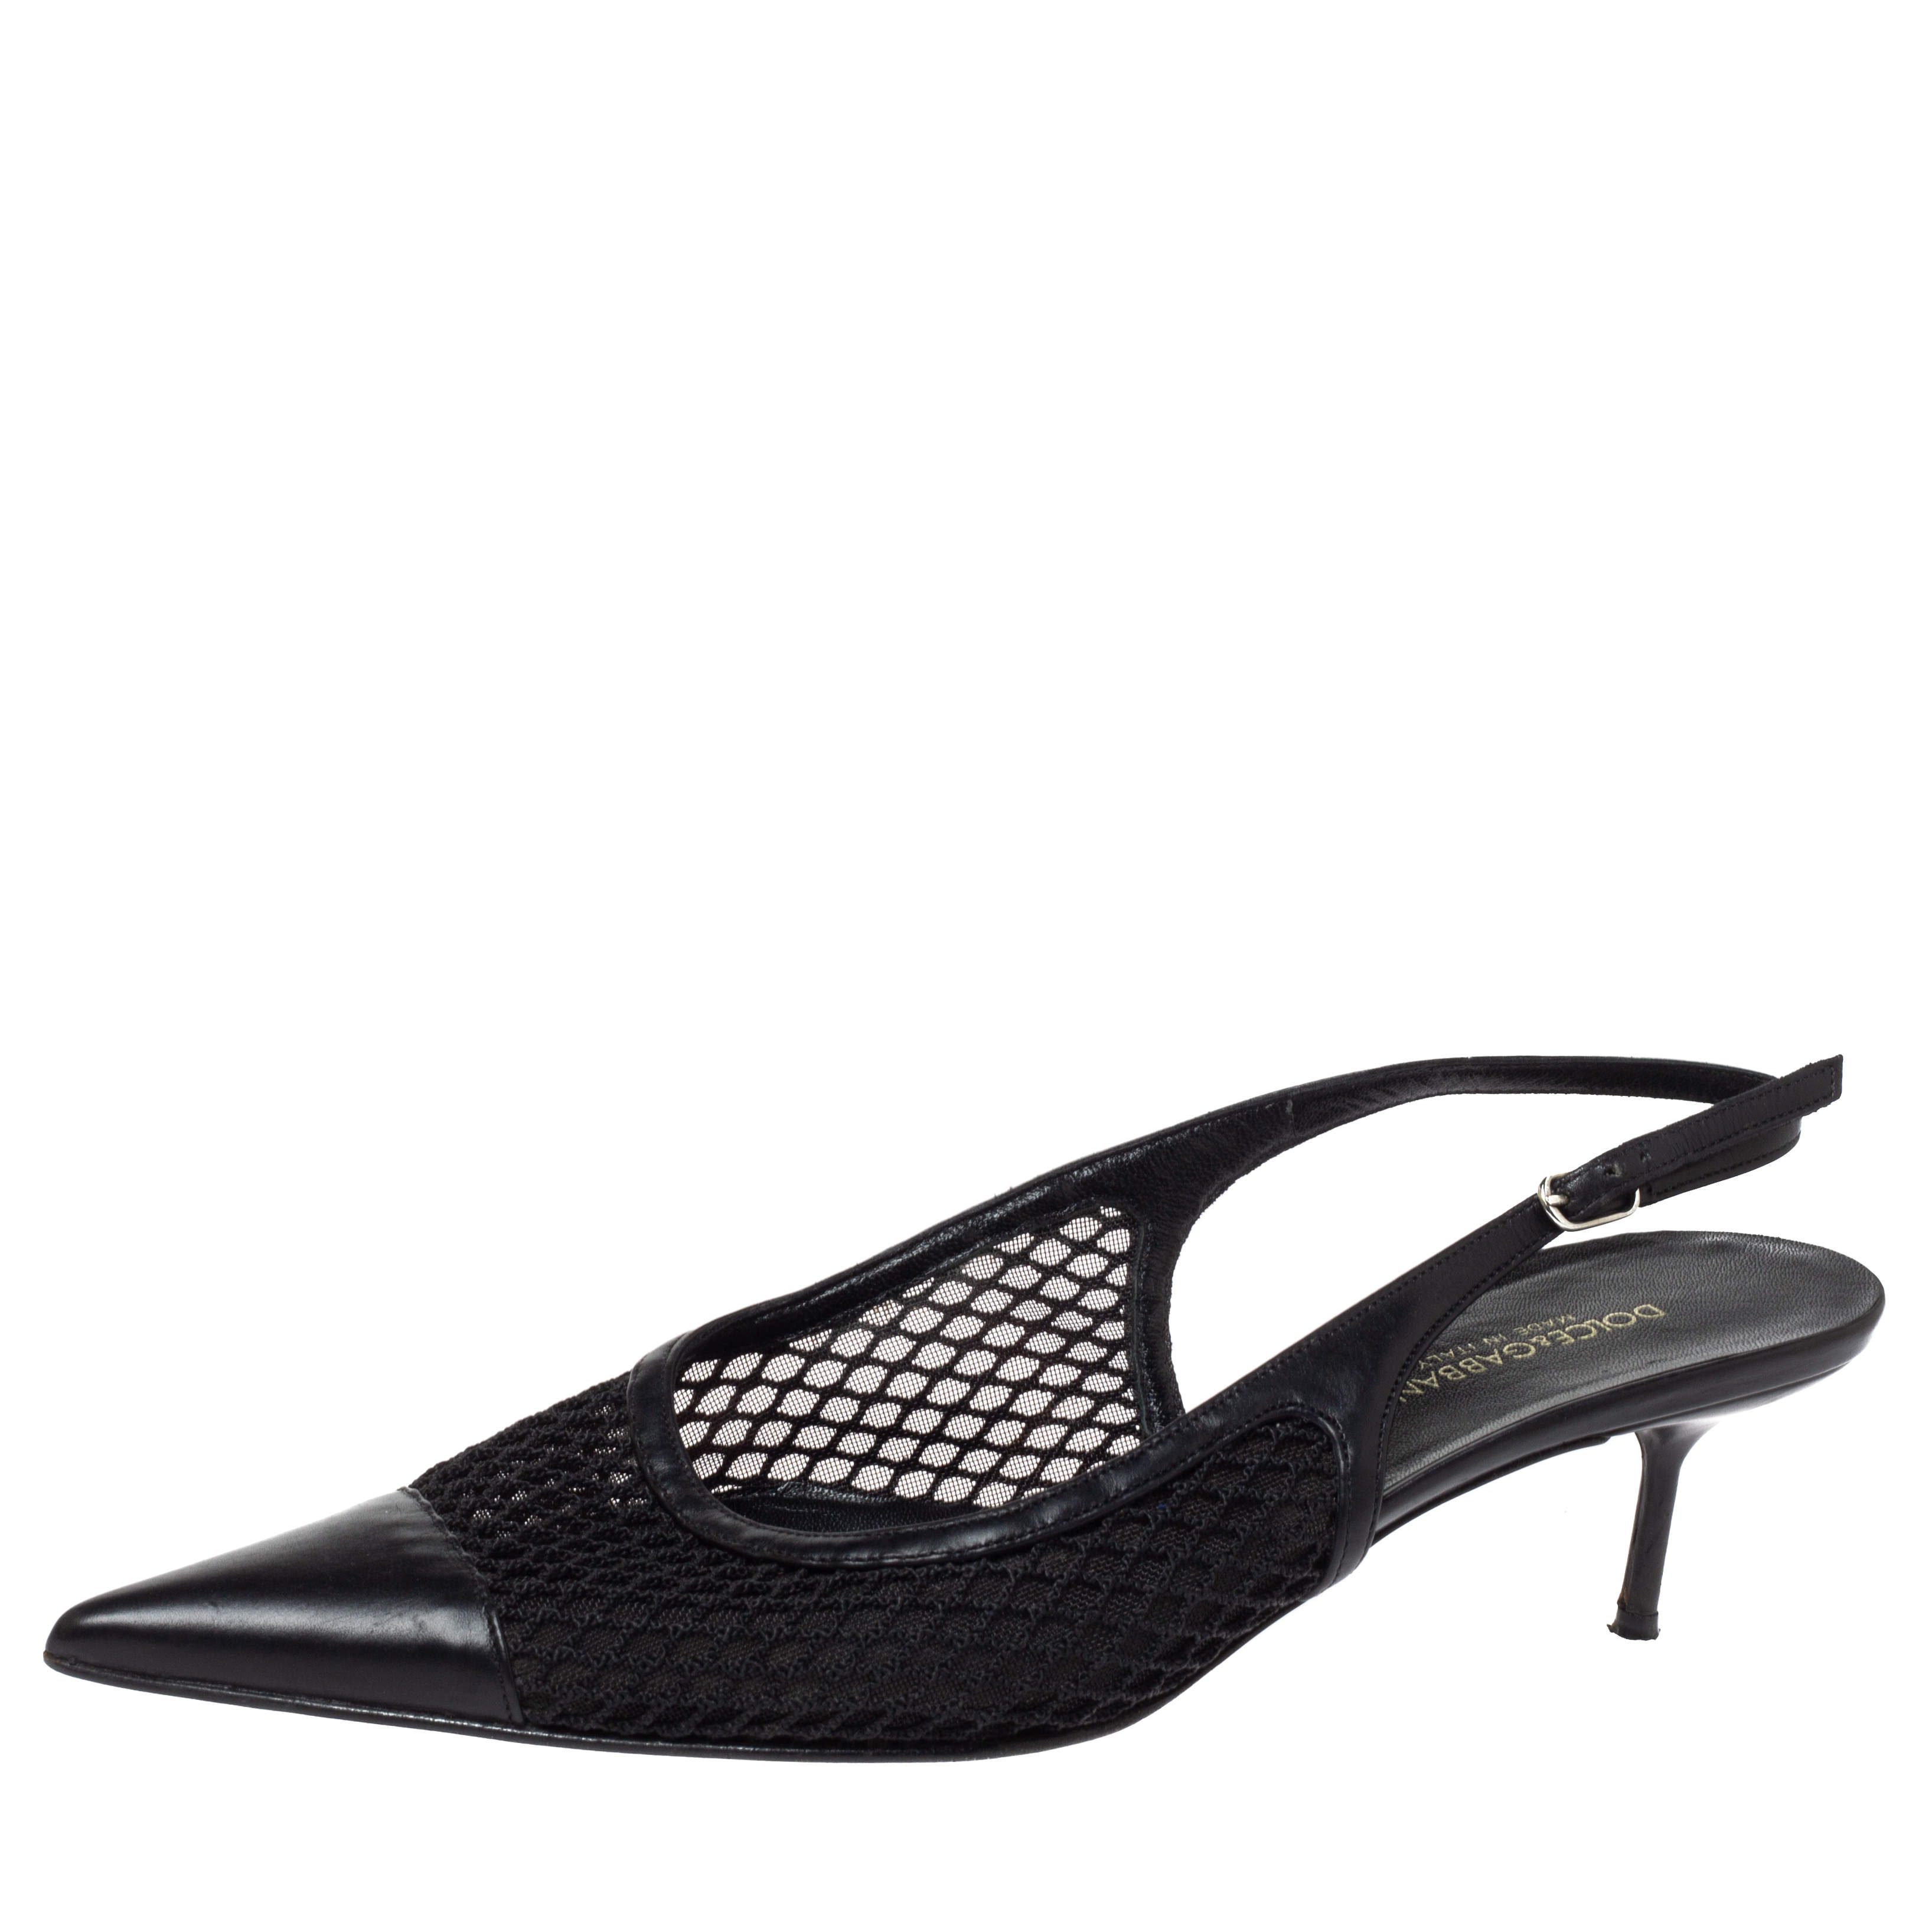 Dolce & Gabbana Black Mesh Slingback Pointed Toe Pumps Size 38